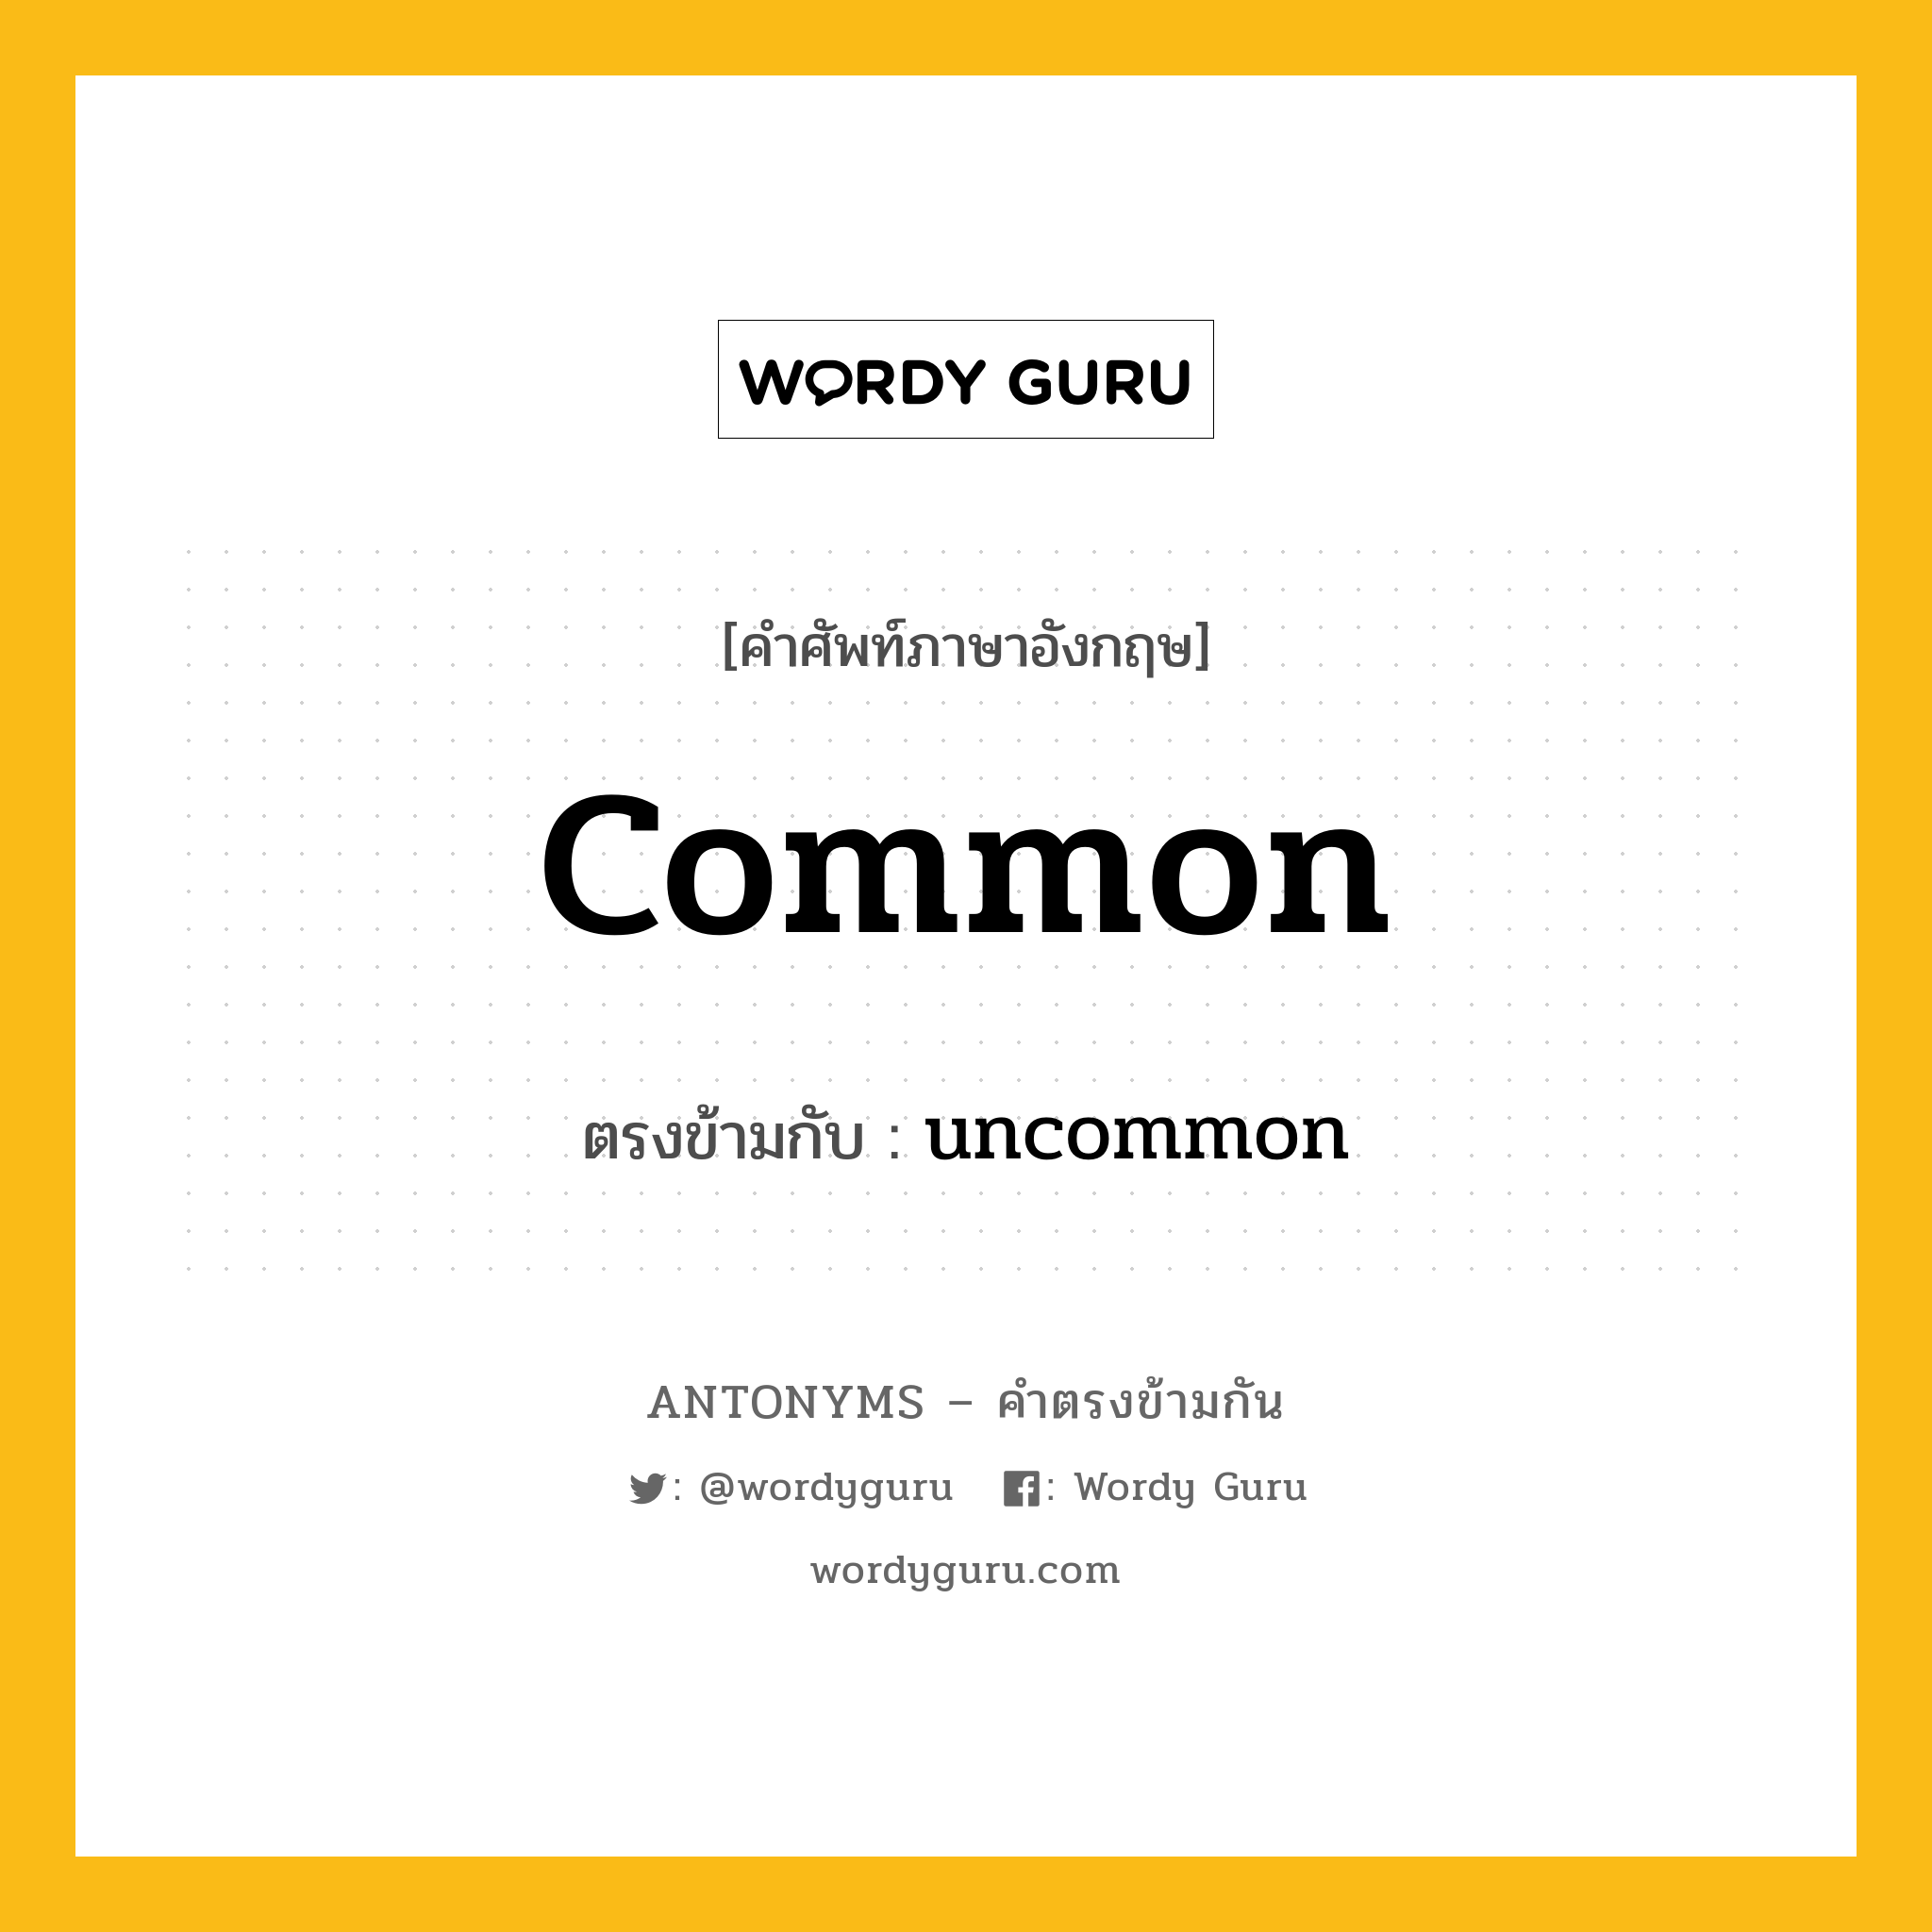 common เป็นคำตรงข้ามกับคำไหนบ้าง?, คำศัพท์ภาษาอังกฤษ common ตรงข้ามกับ uncommon หมวด uncommon